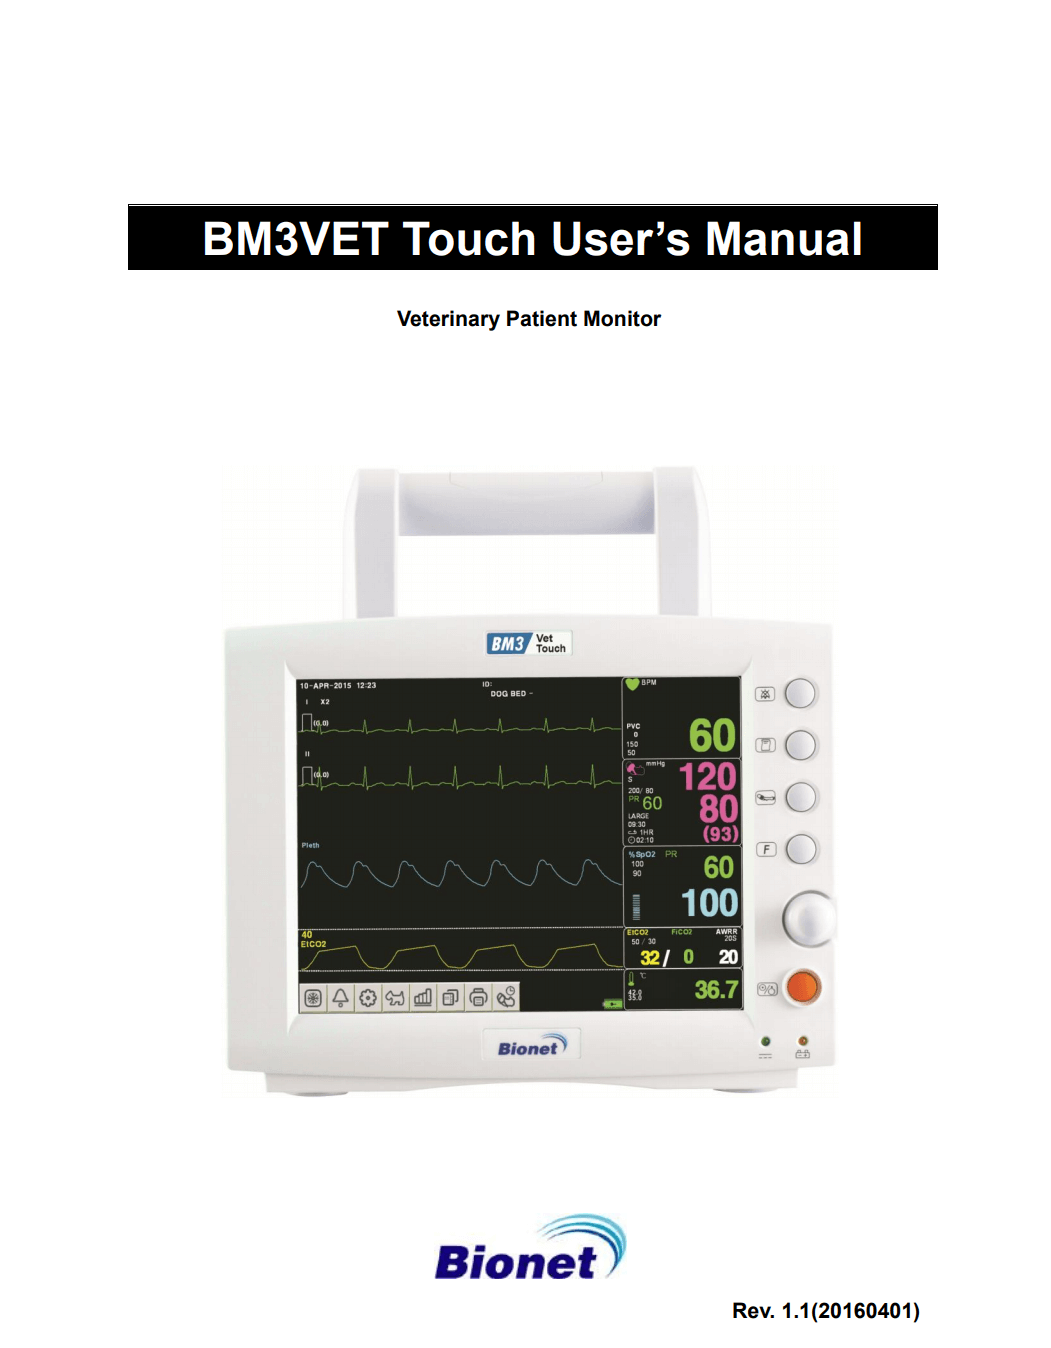 Bionet bm3 vet manual 2017